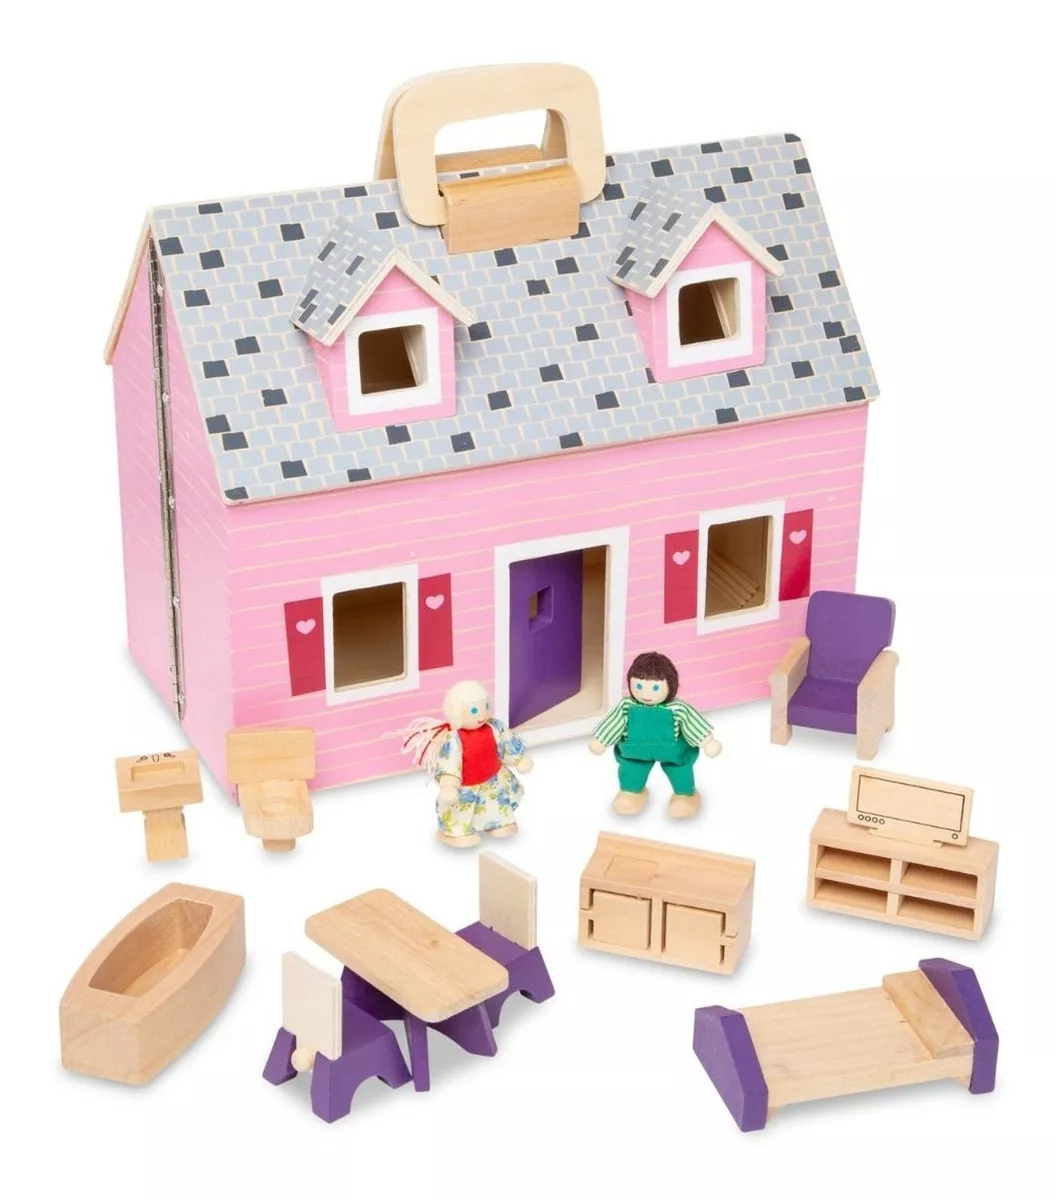 Segunda imagen para búsqueda de casa de muñecas de madera